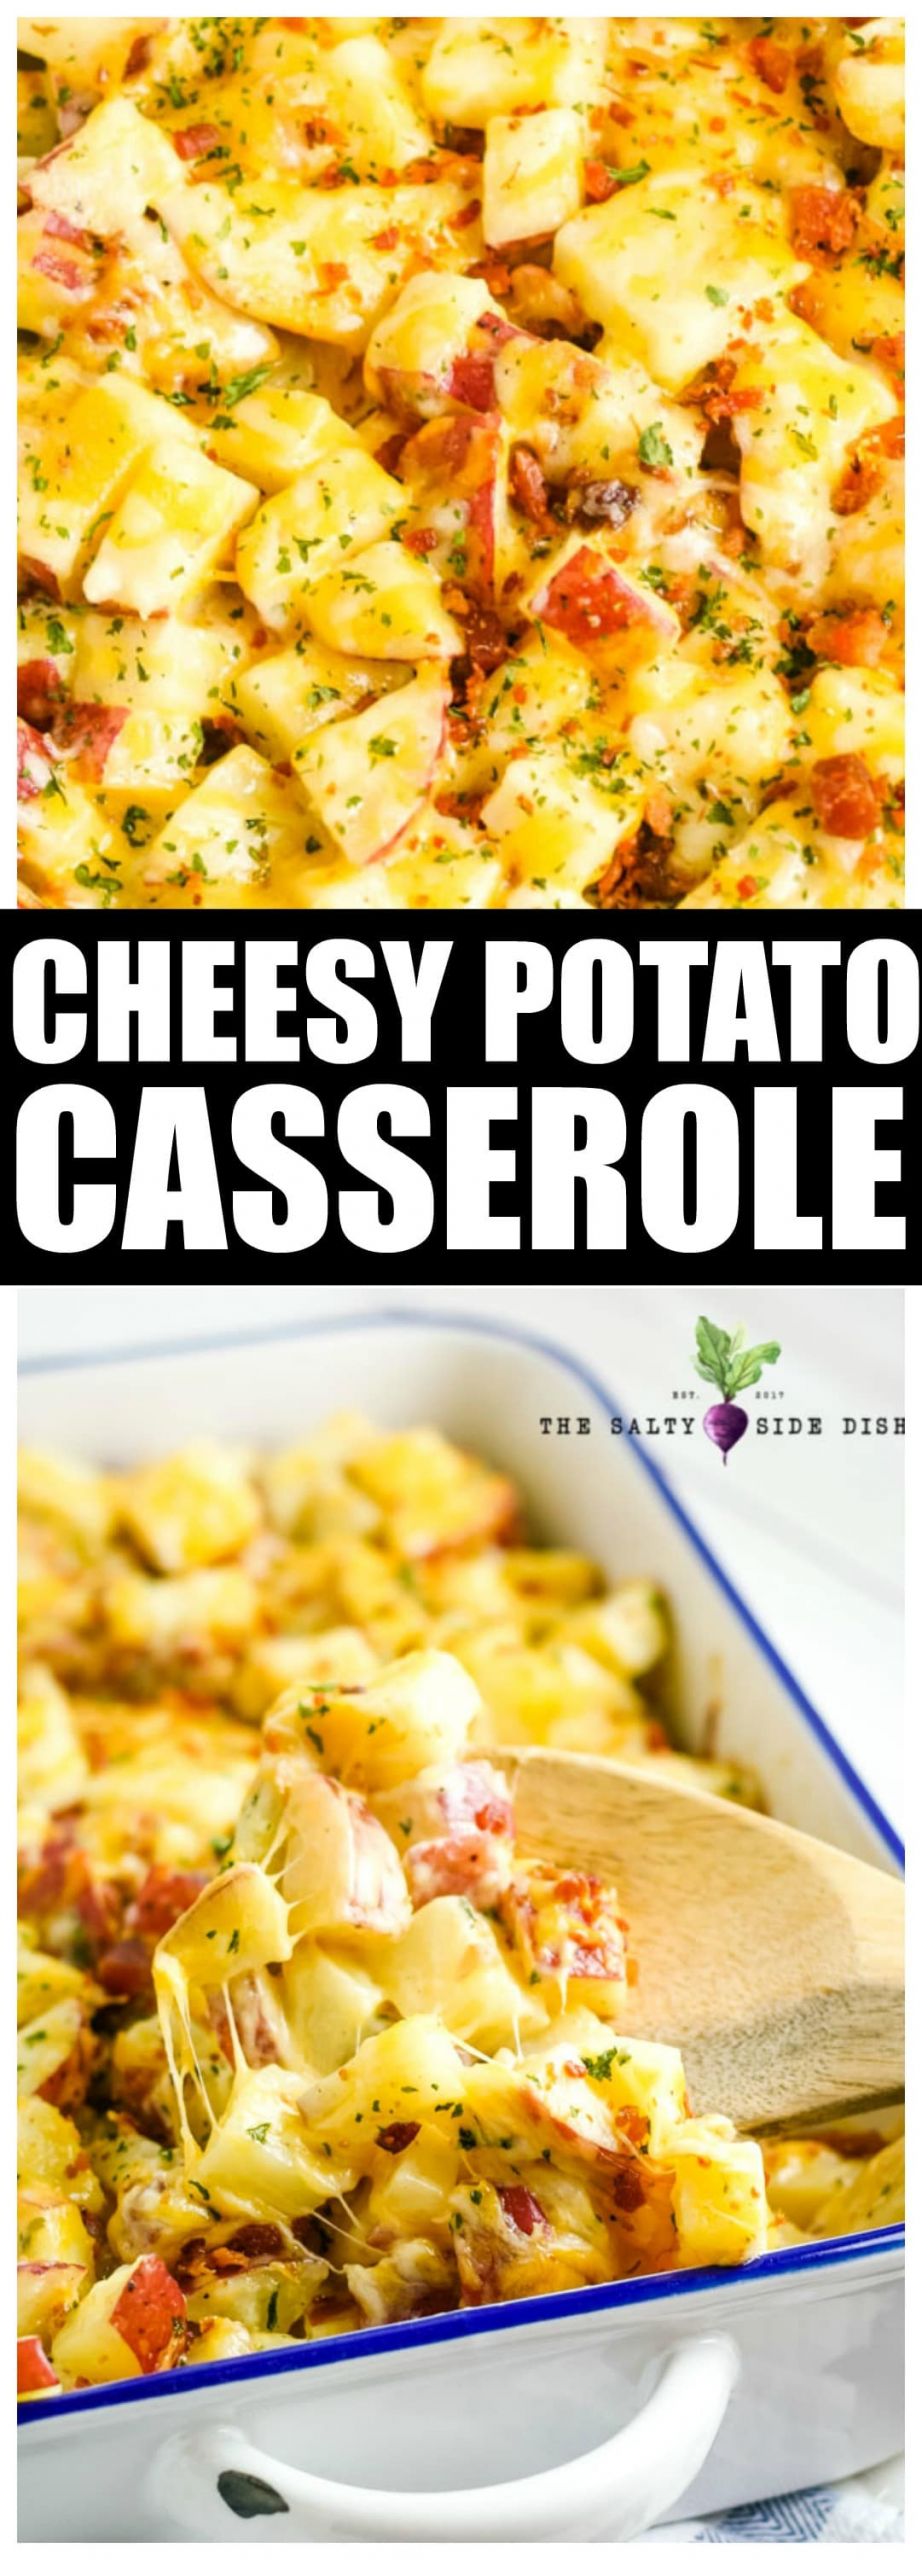 Vegetable Casserole Side Dishes
 Cheesy Potato Casserole Side Dish Recipe